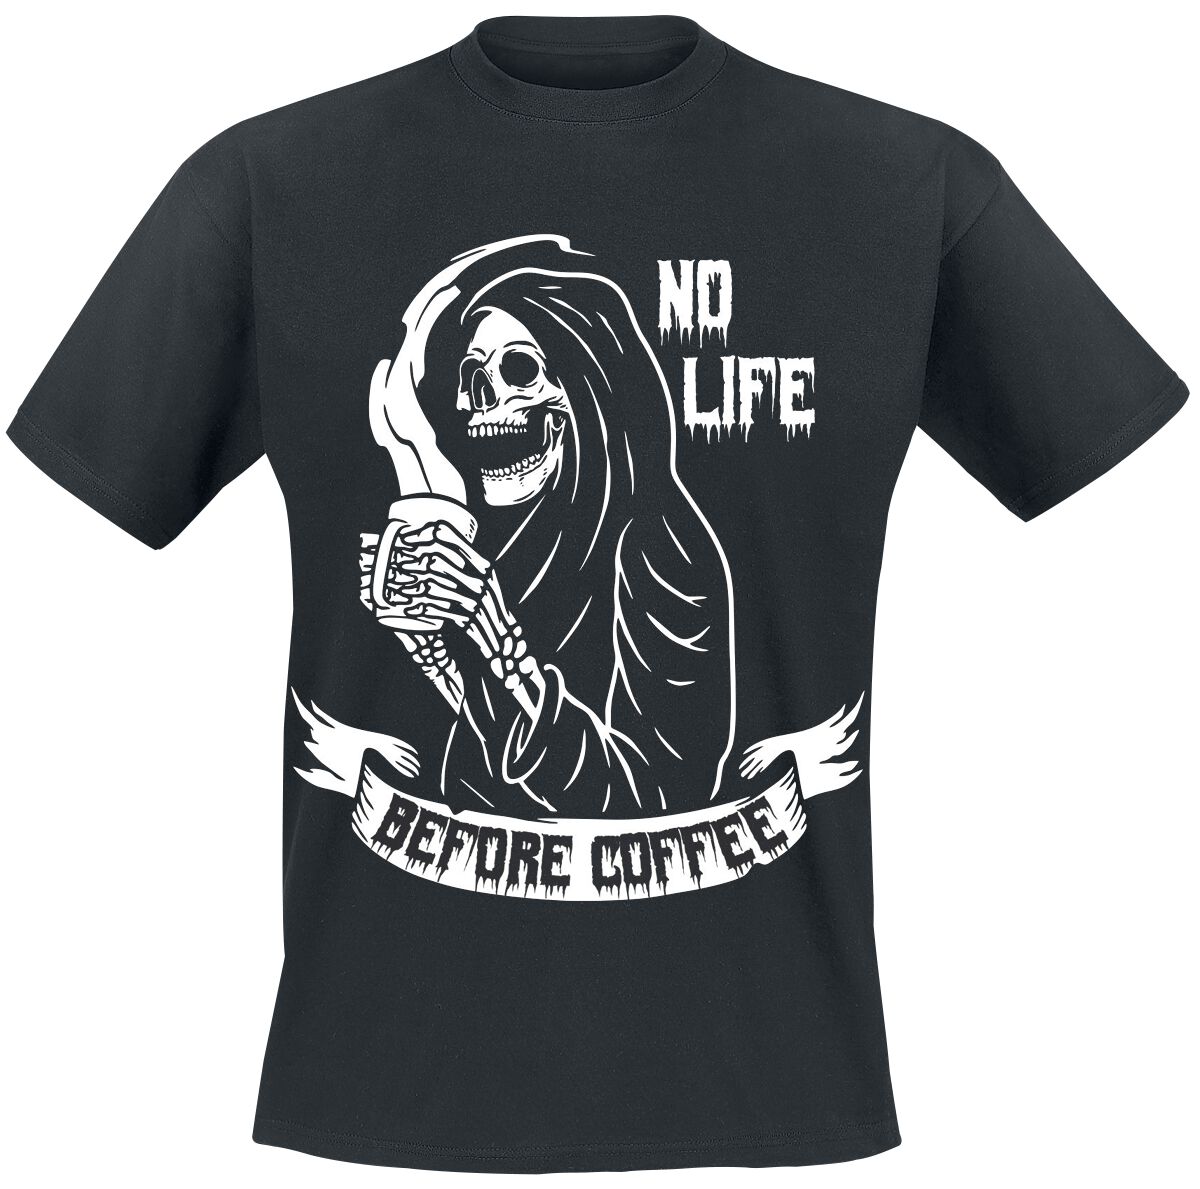 Slogans Funshirt - Slogans - No Life Before Coffee T-Shirt black